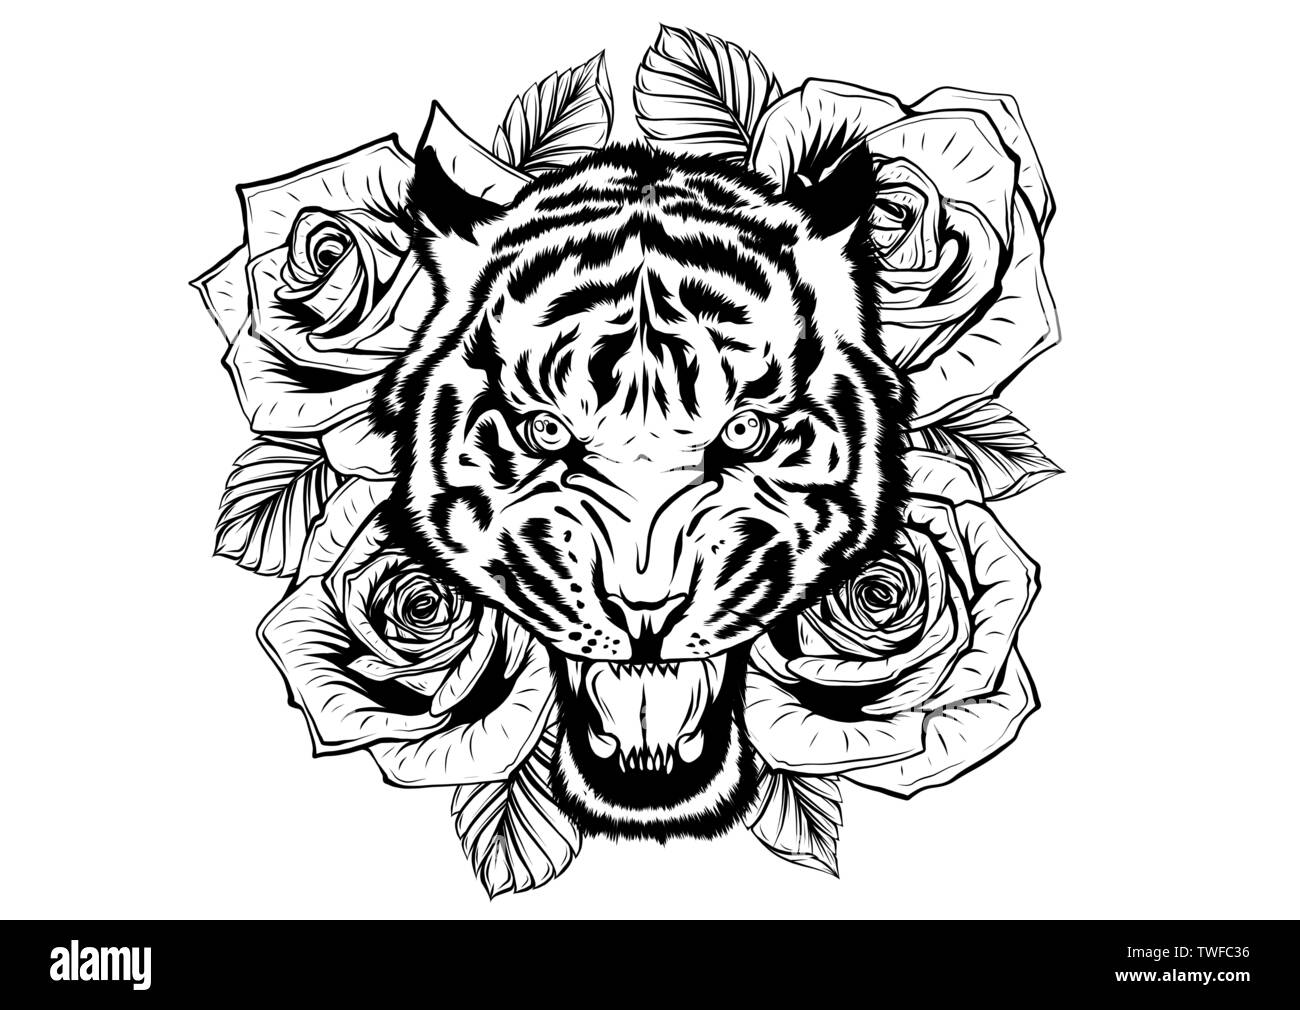 Vector illustration de tête de tigre rugissant et roses tattoo Illustration de Vecteur